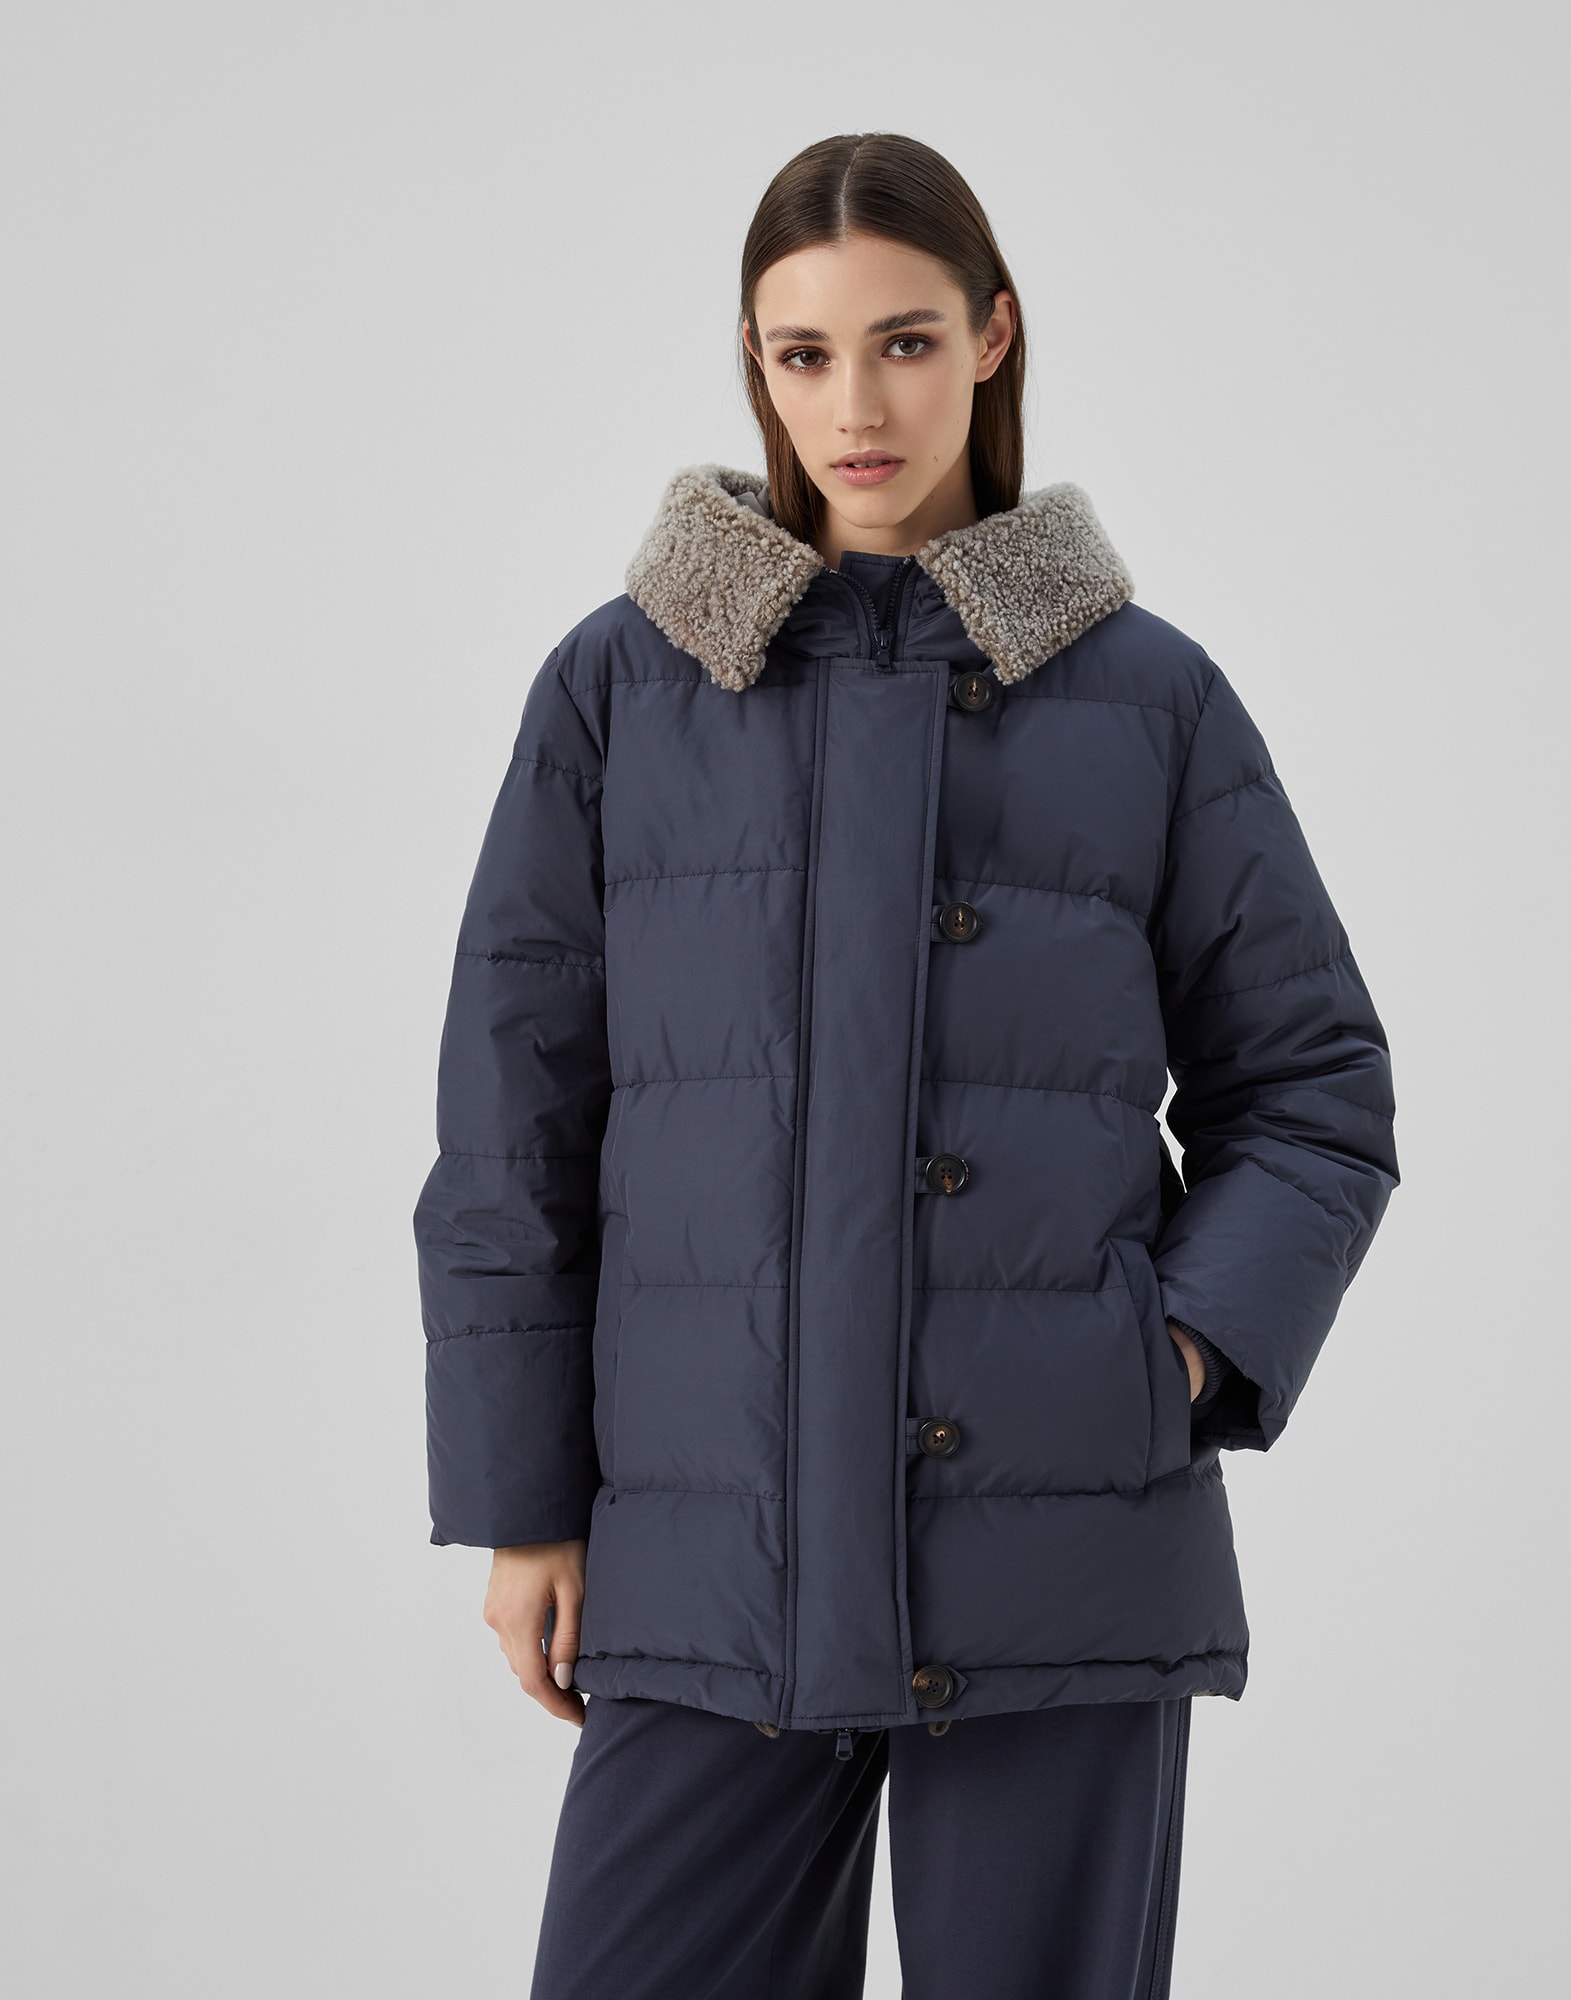 Taffeta down jacket (232MB5742816) for Woman | Brunello Cucinelli